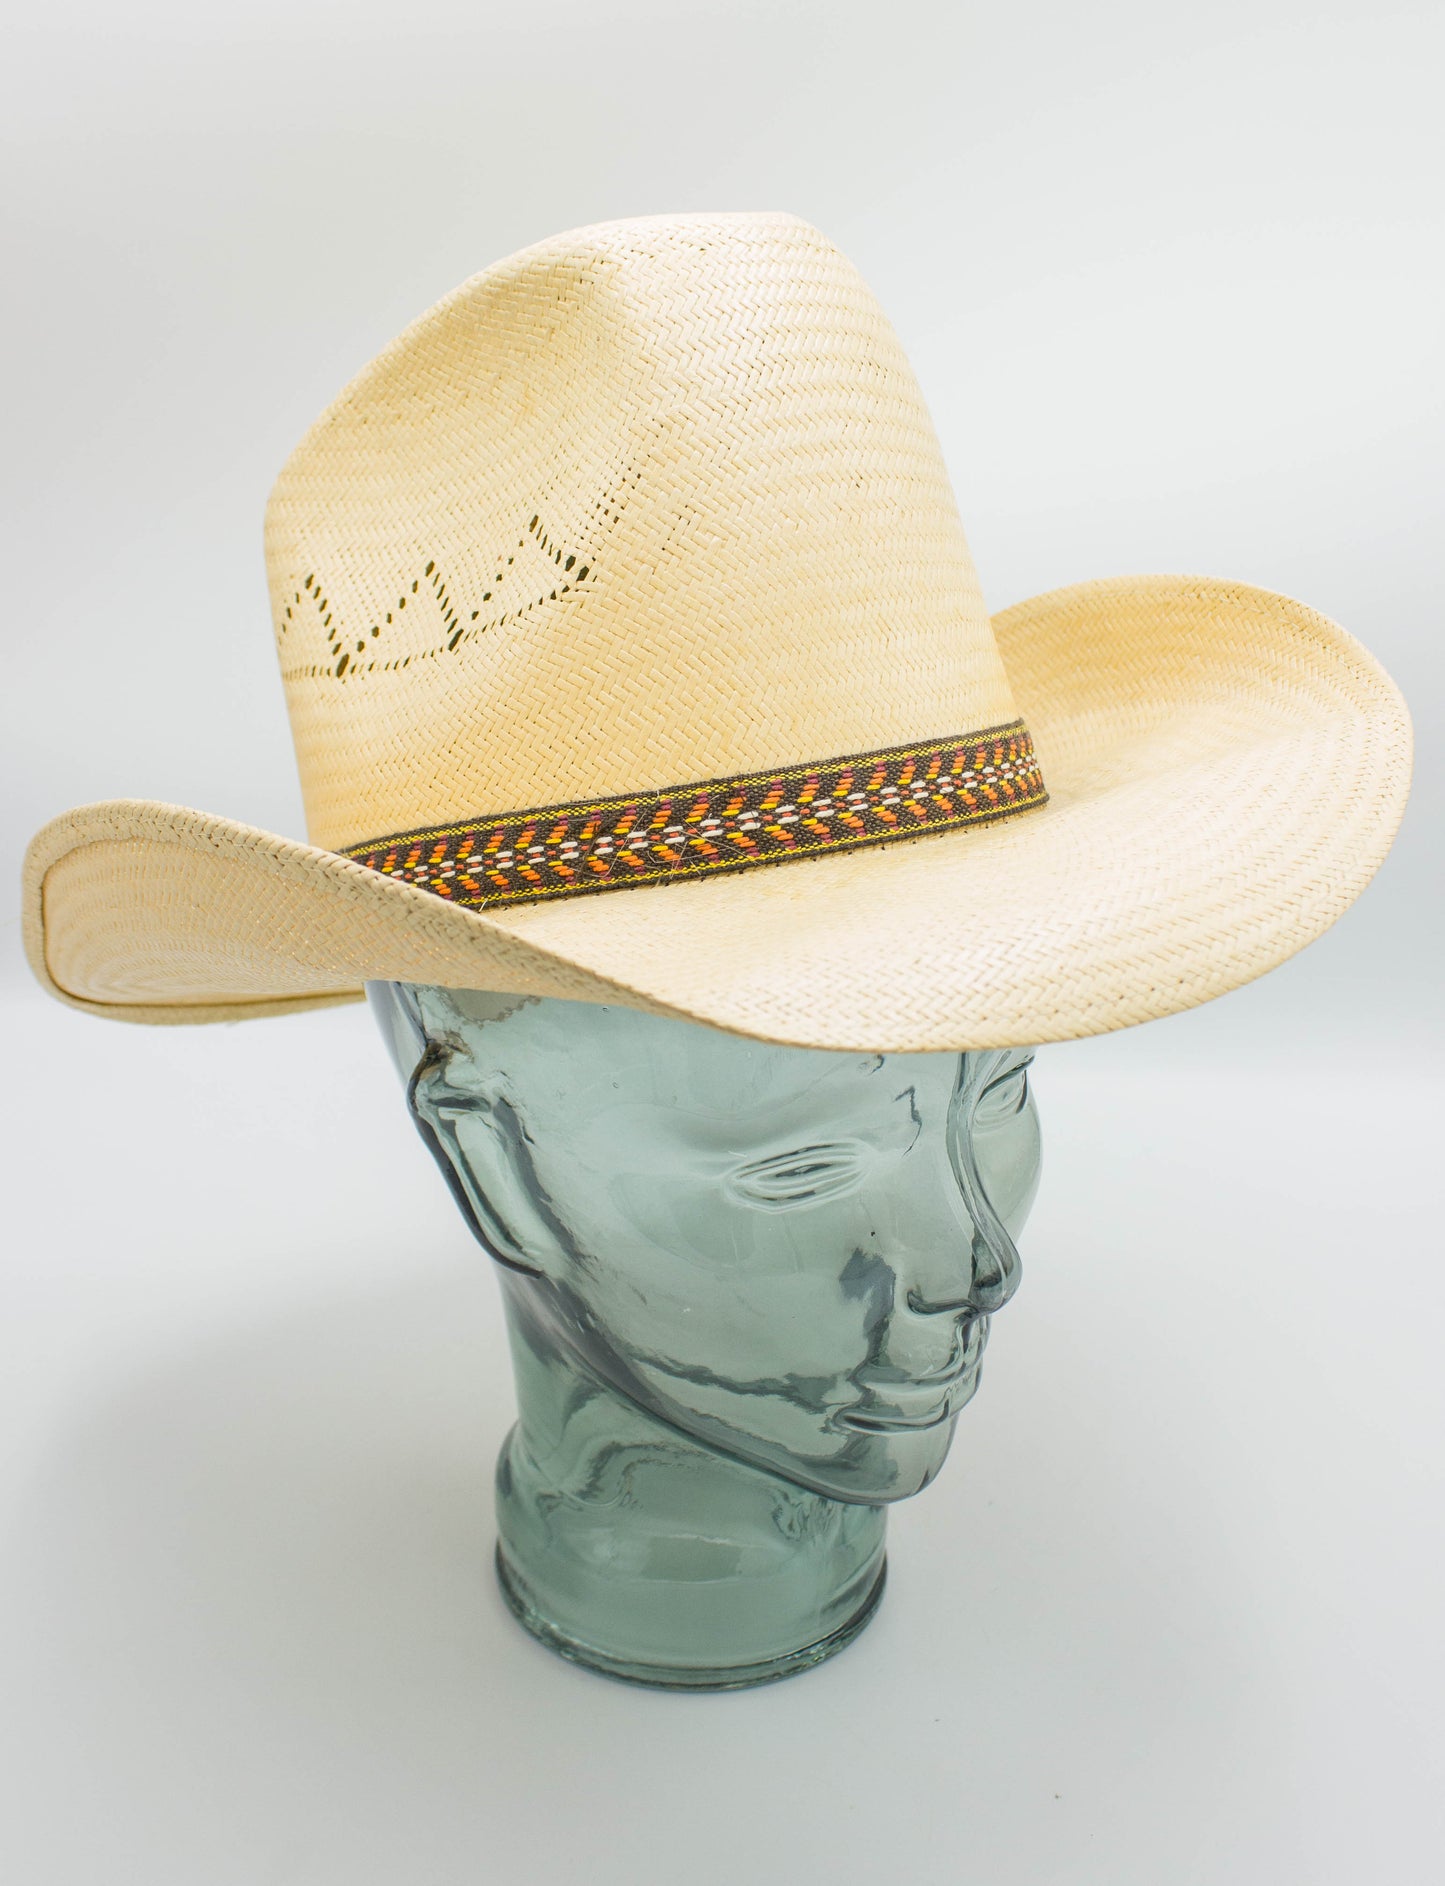 Vintage Stomper 70s Tall Straw Cowboy Hat Size 6 7/8